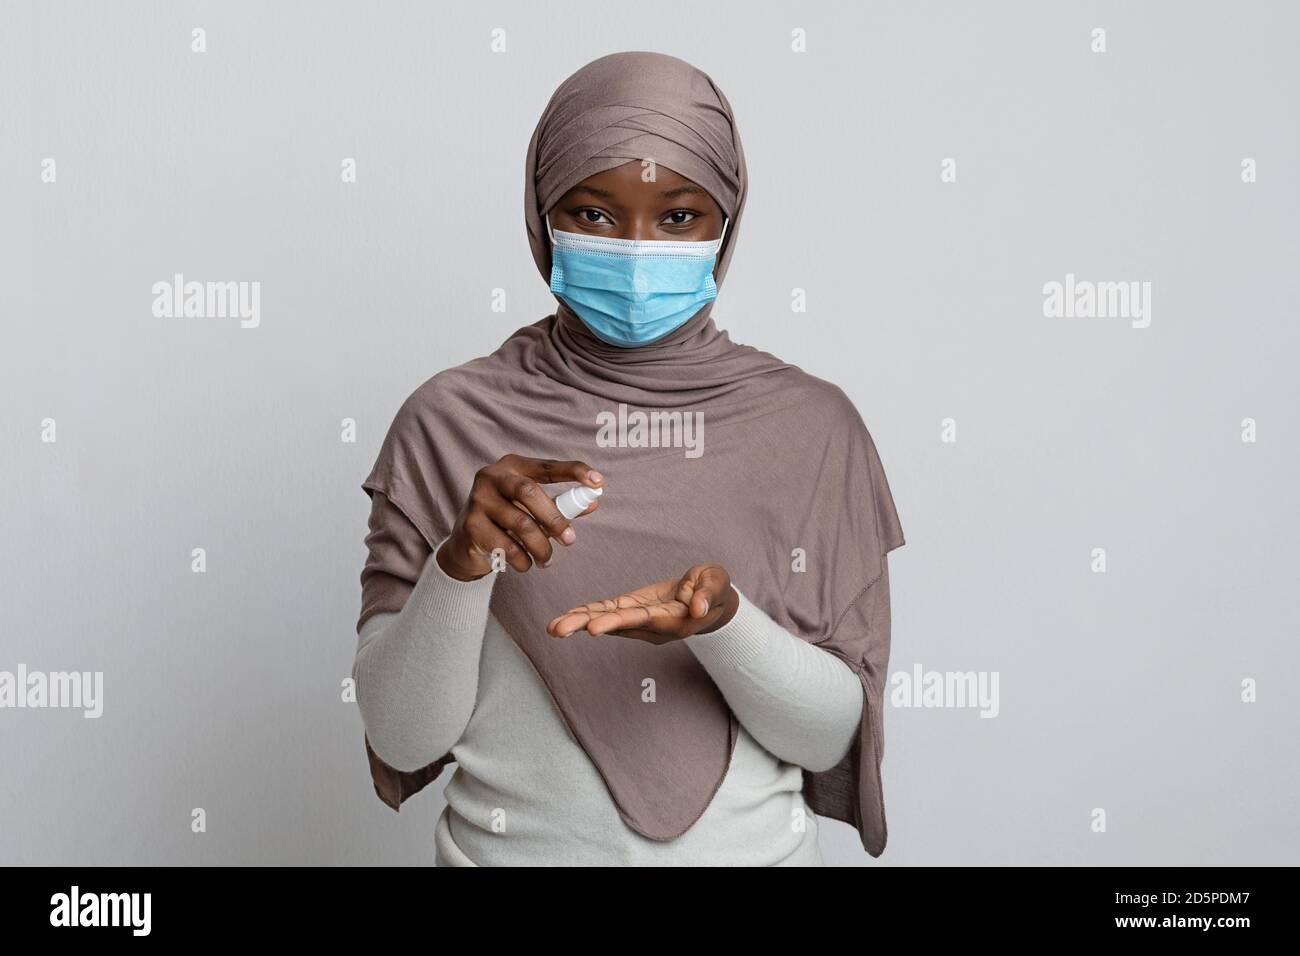 Coronavirus Precautions. Black muslim woman in mask applying disinfectant spray on hands Stock Photo